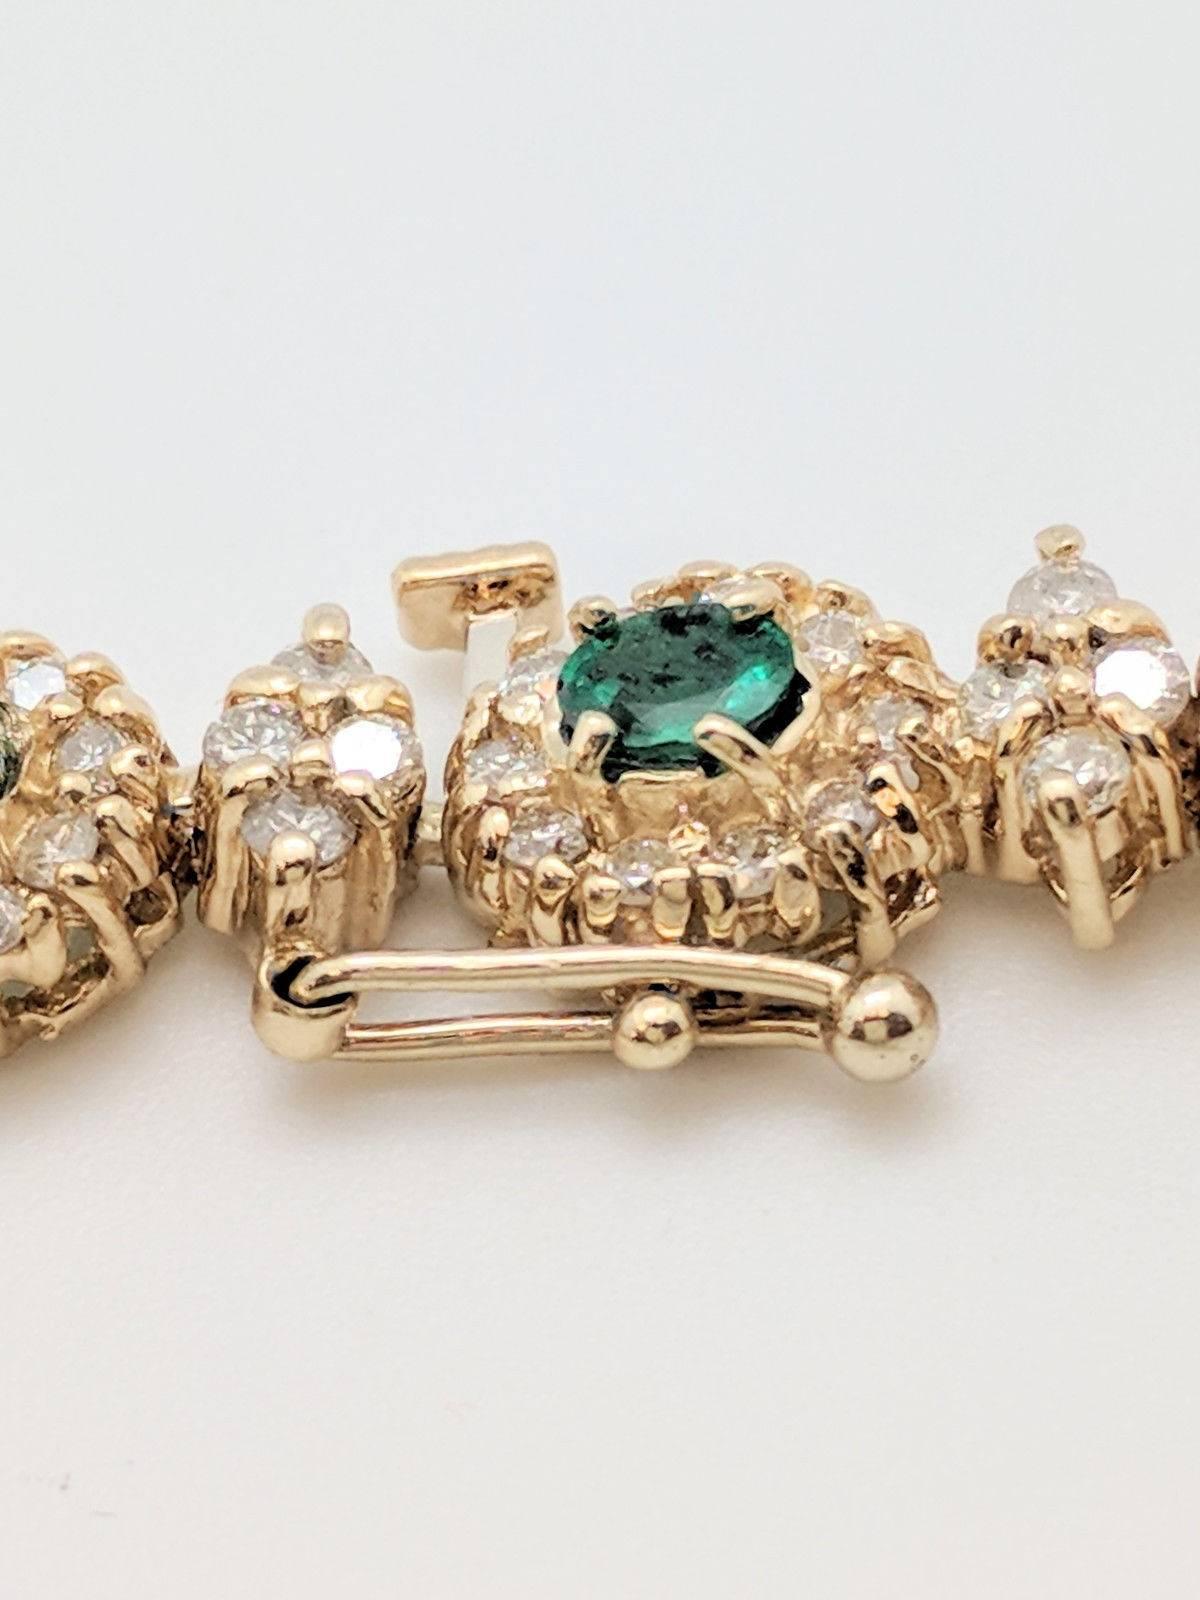 14 Karat Gold 16.72 Carat Emerald and Diamond Tennis Necklace 54.8 Grams For Sale 2